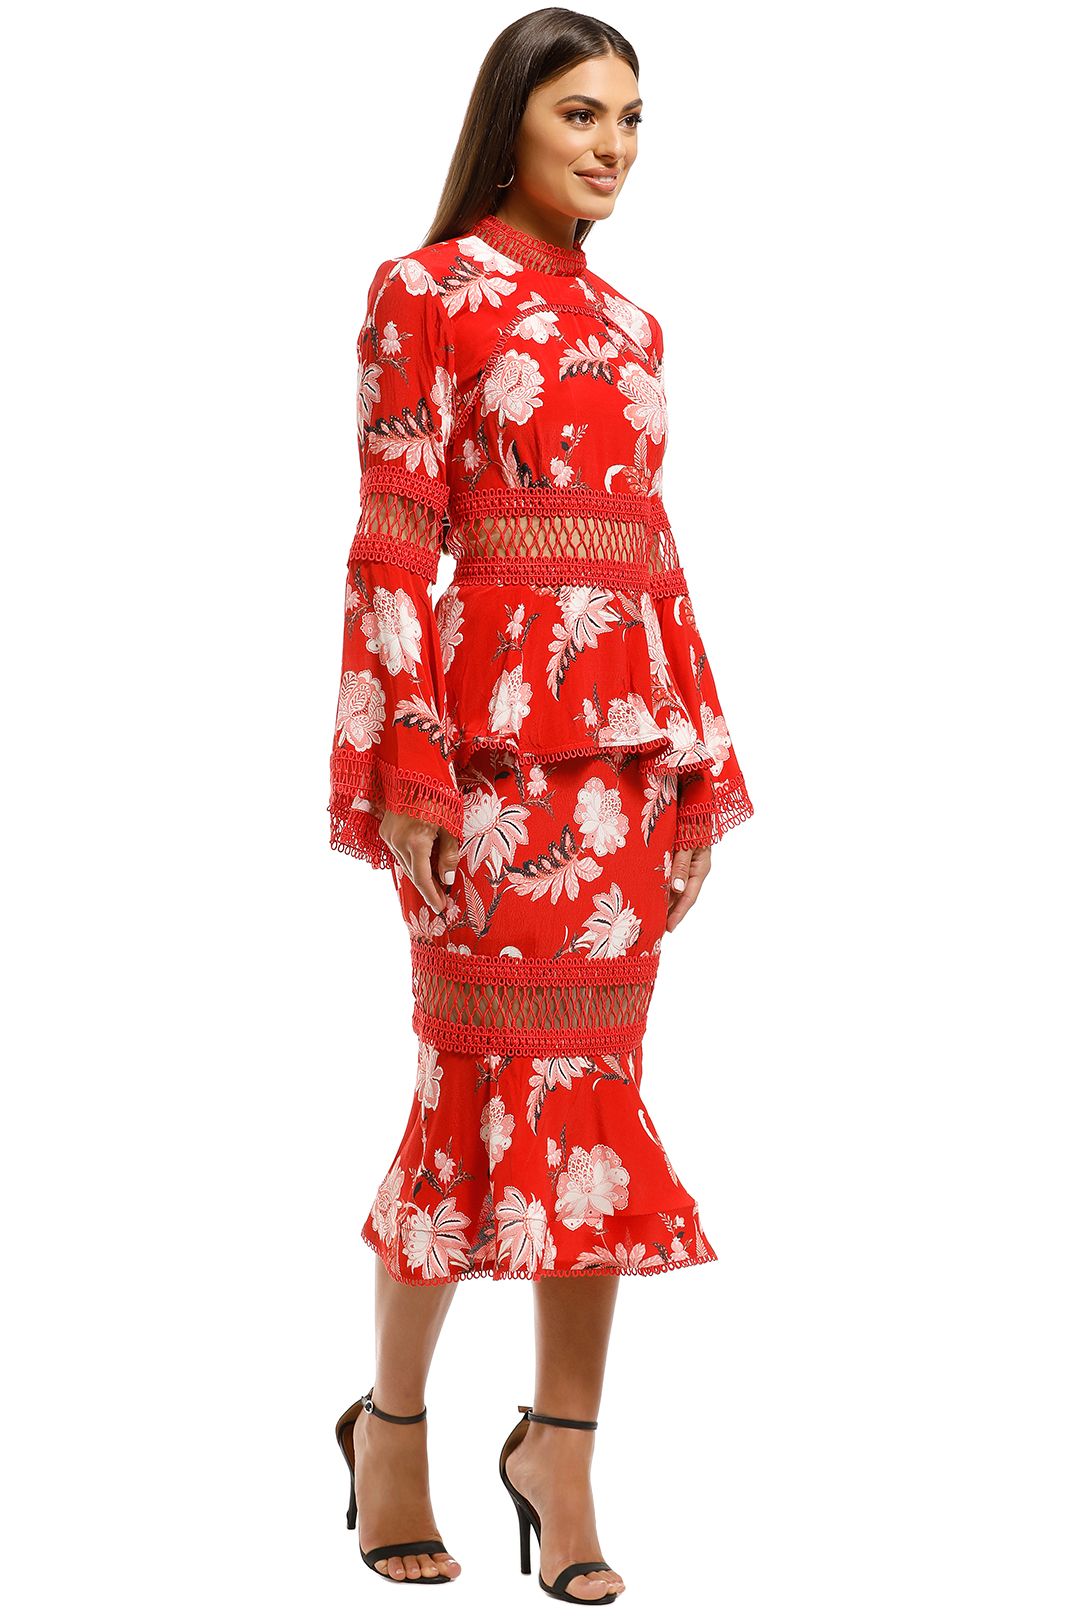 red flower midi dress